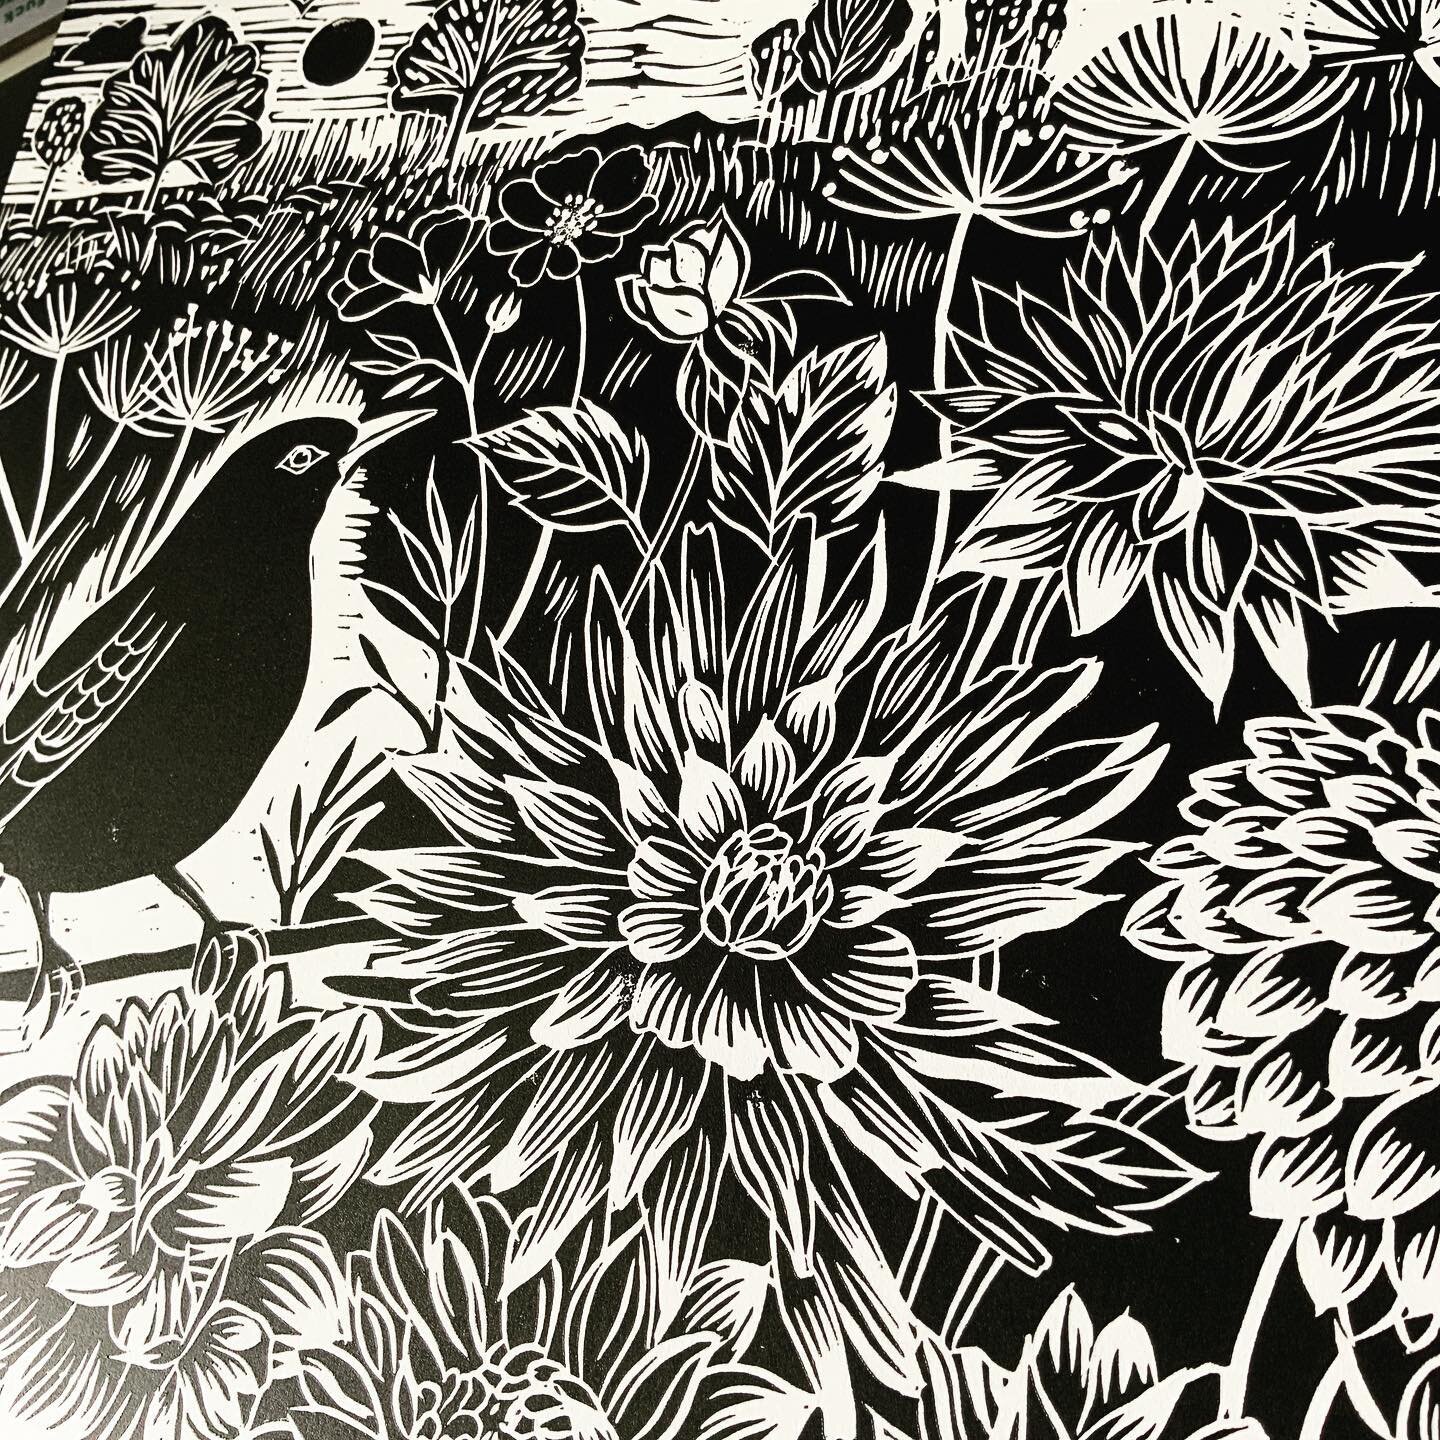 Getting there with the dahlia print! 
.
.
.
#wip #linocut #linocutfriends #printmaking #printspotters #inspiredbynature #pfeilart #natureart #linocutprint #wildlifeillustration #floraldesign #floralsyourway #natureinspired #botanicallinoprint #contem